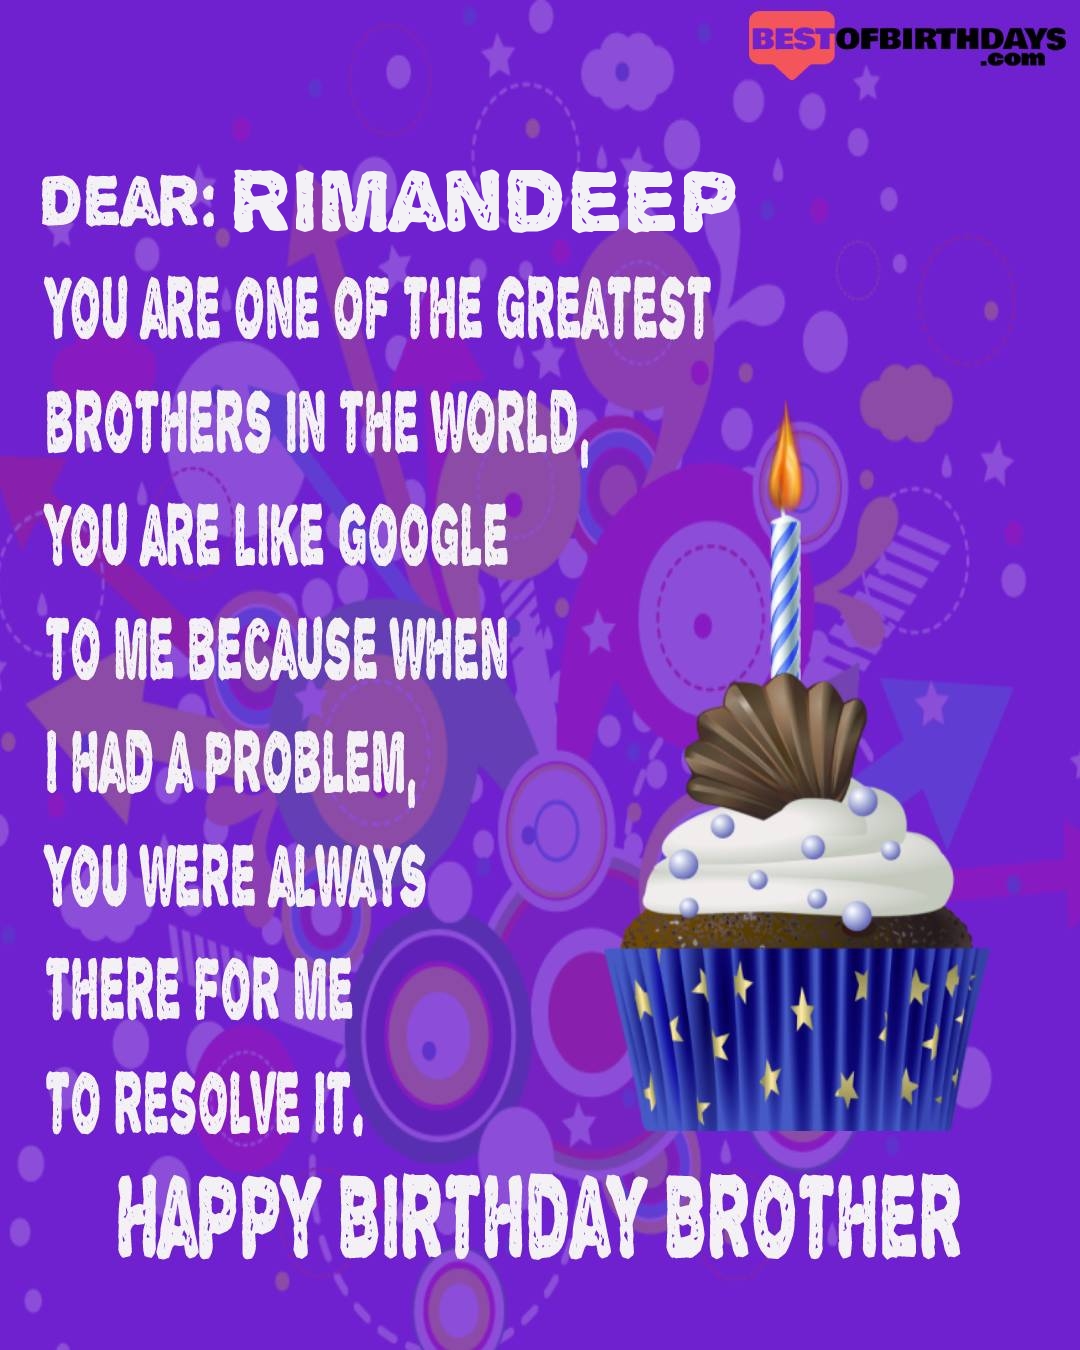 Happy birthday rimandeep bhai brother bro